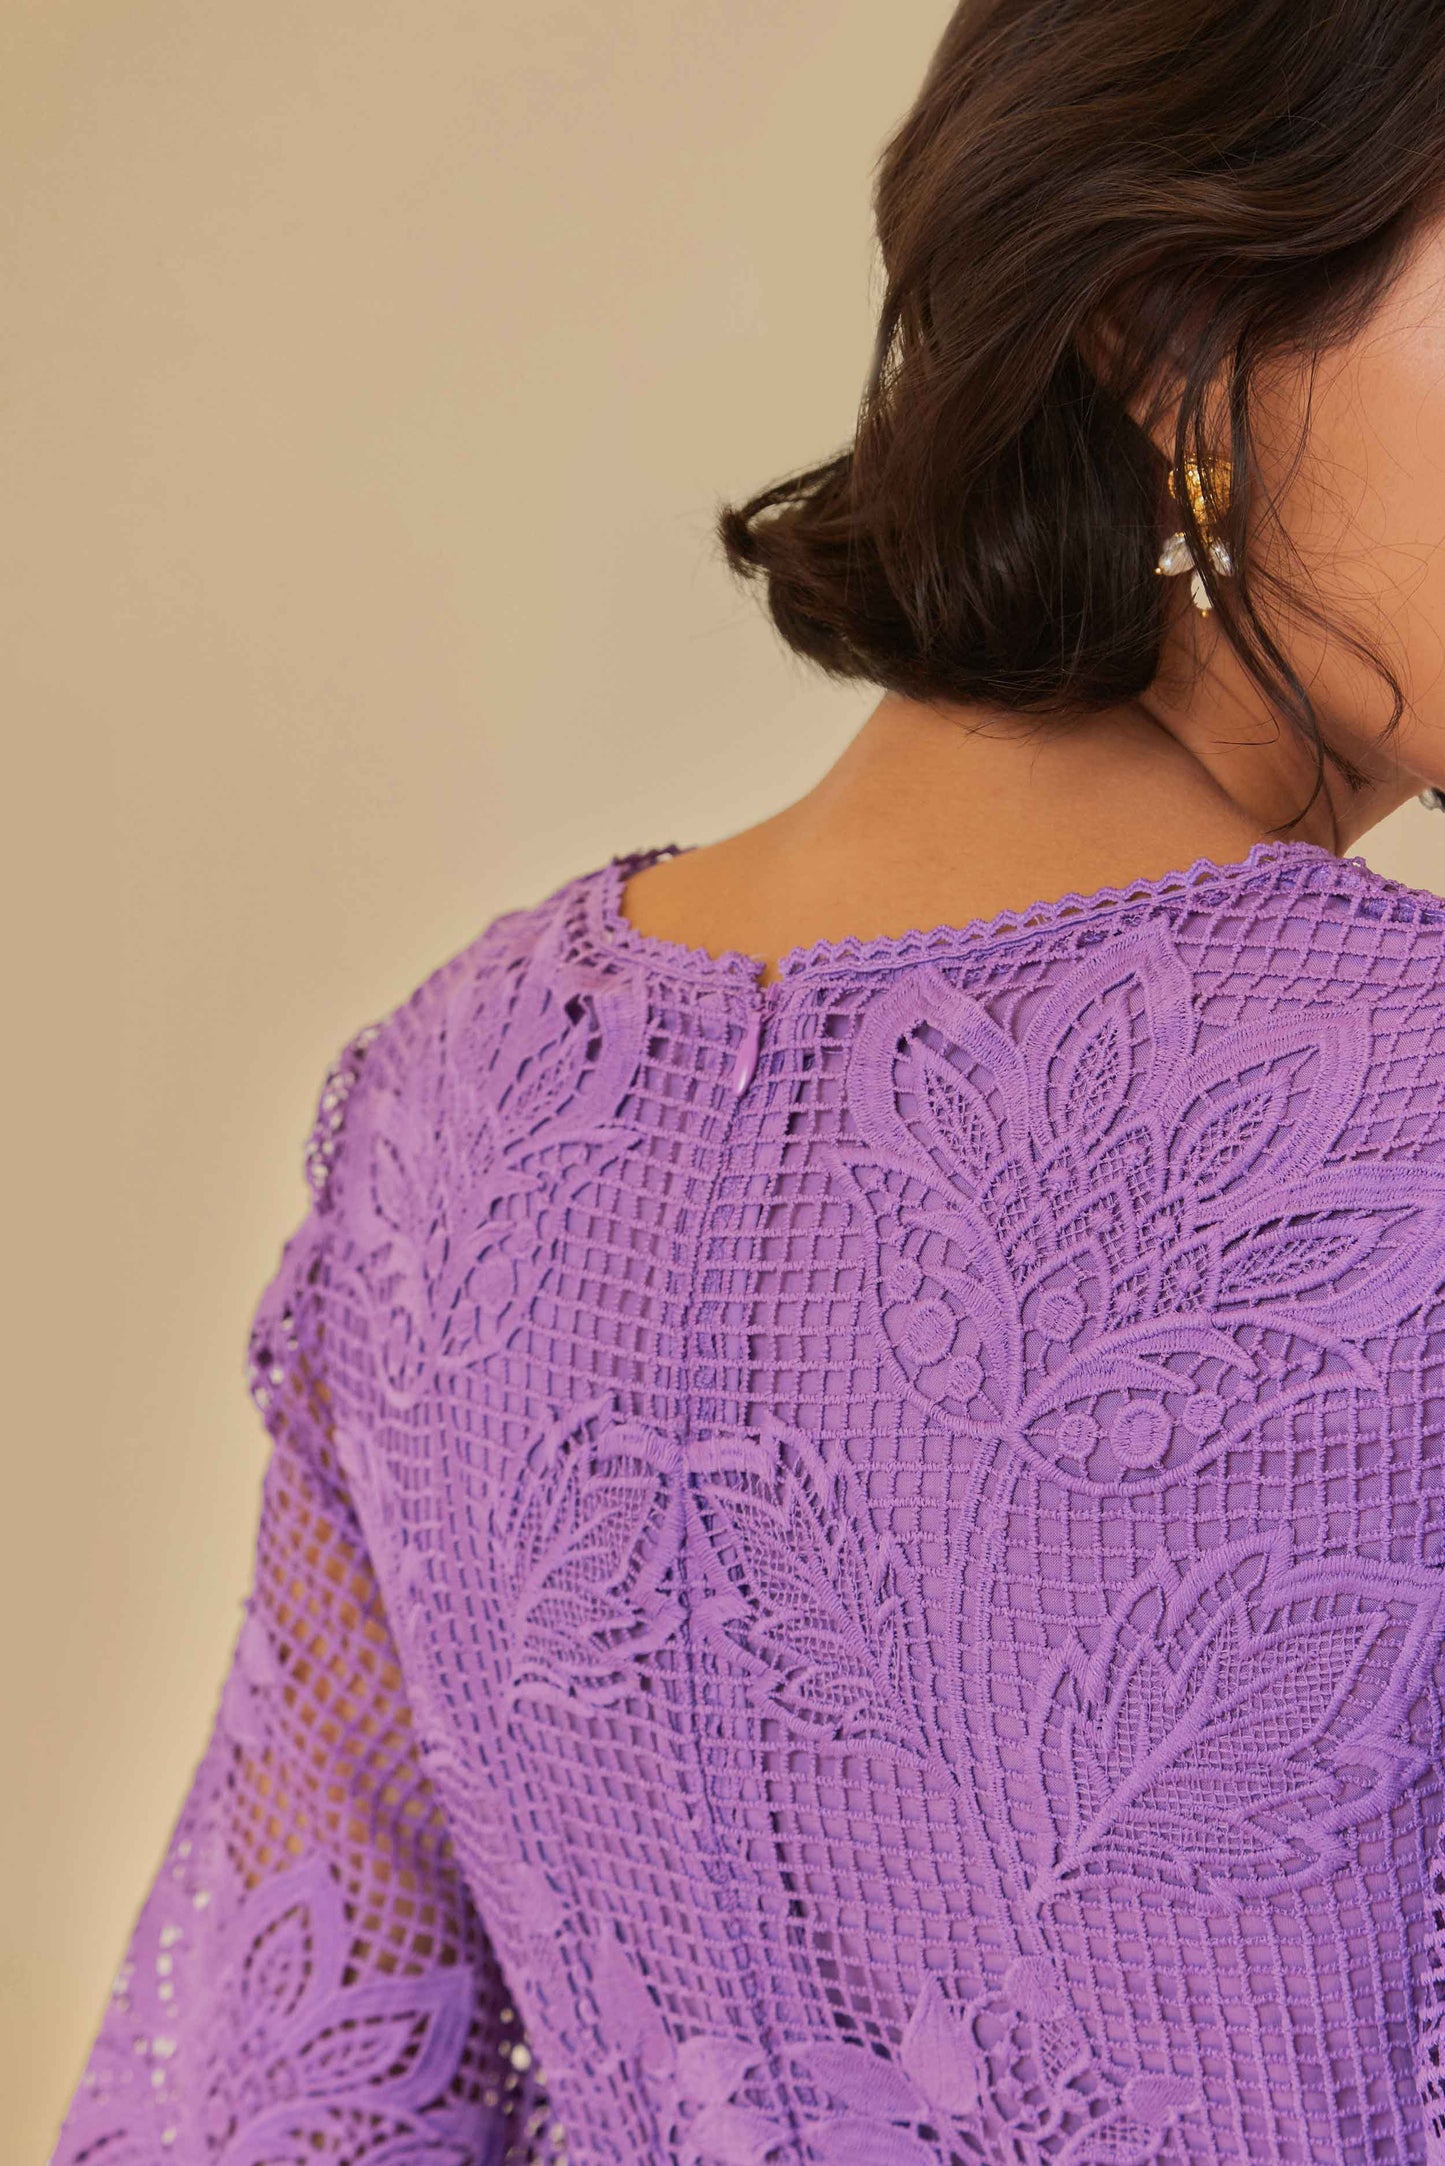 Lilac Guipure Cut-Out Midi Dress